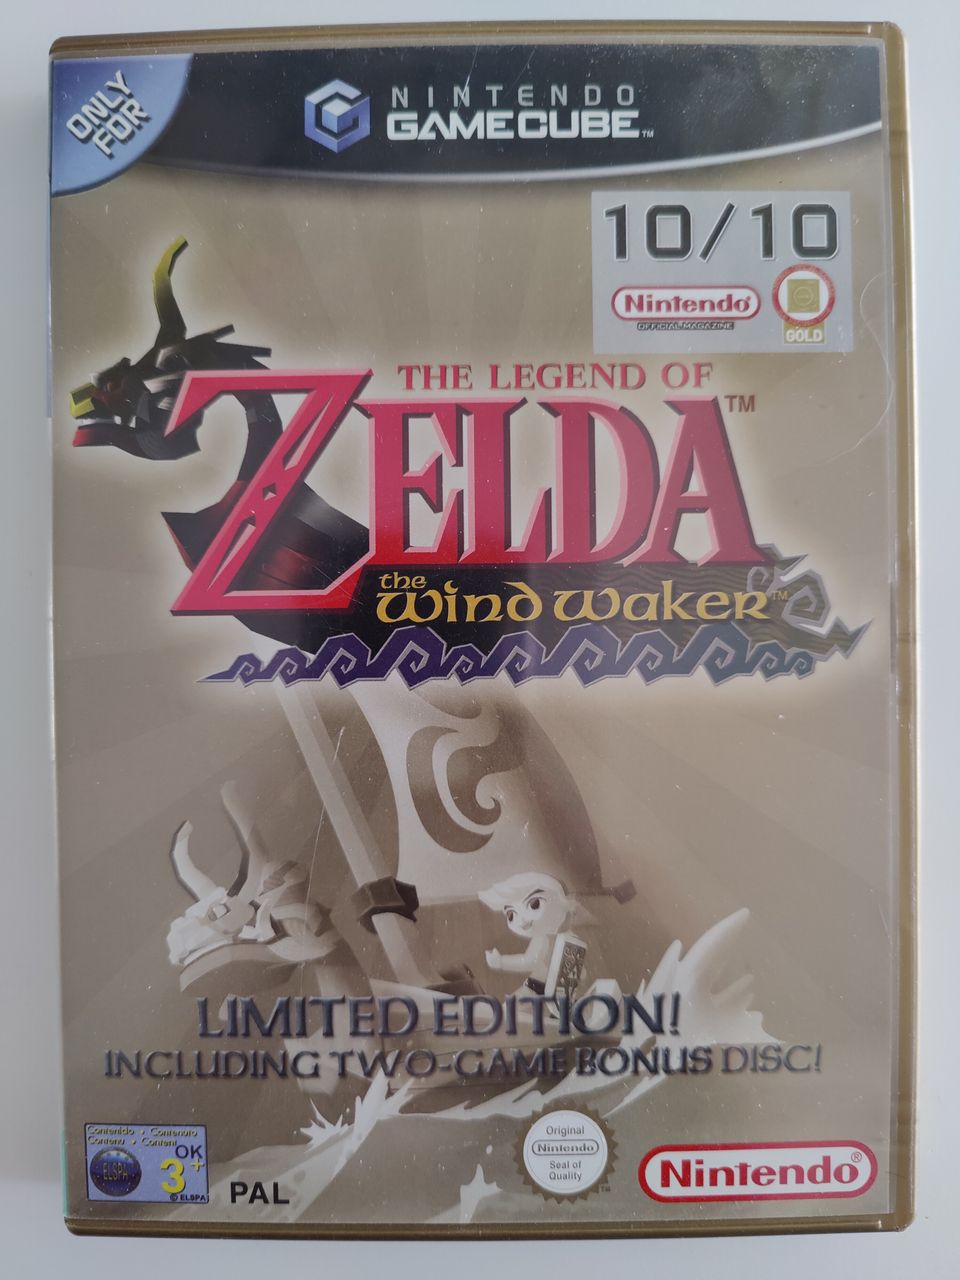 The Legend of Zelda: Wind Waker Limited Edition (GameCube) CIB